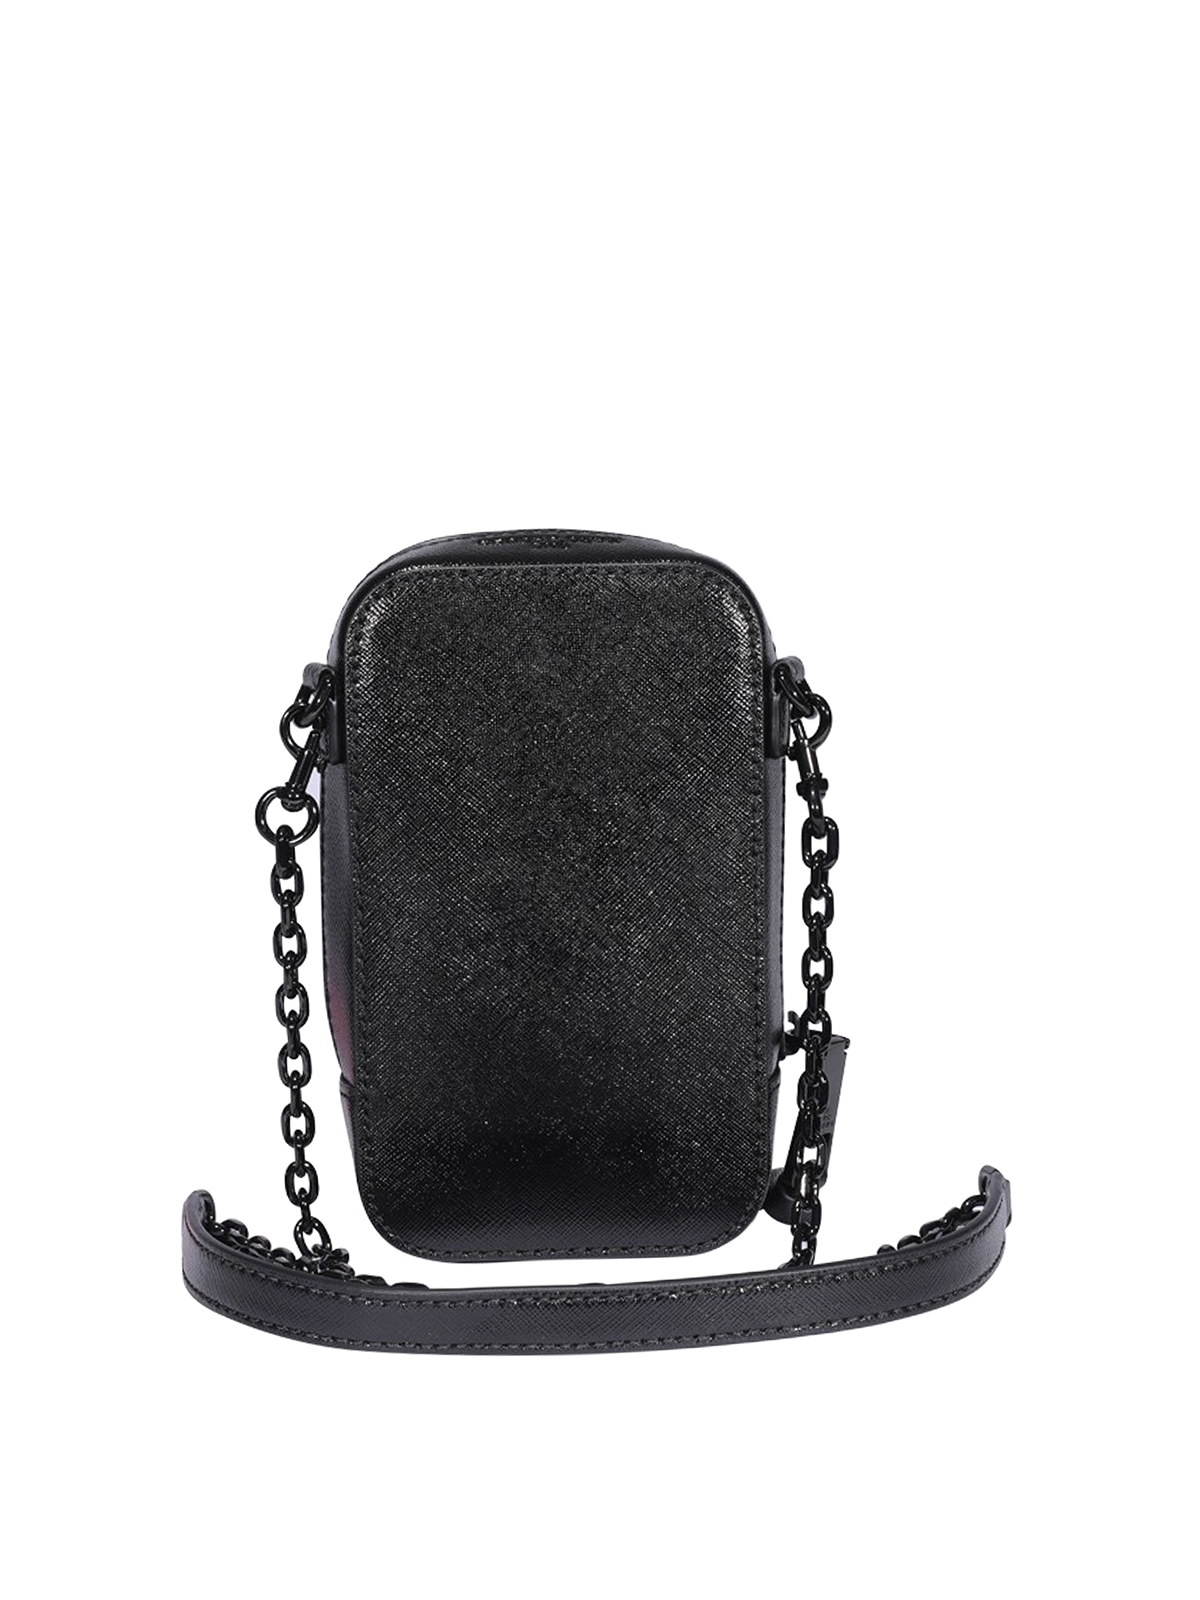 Marc Jacobs Black Hot Shot DTM Mini Bag